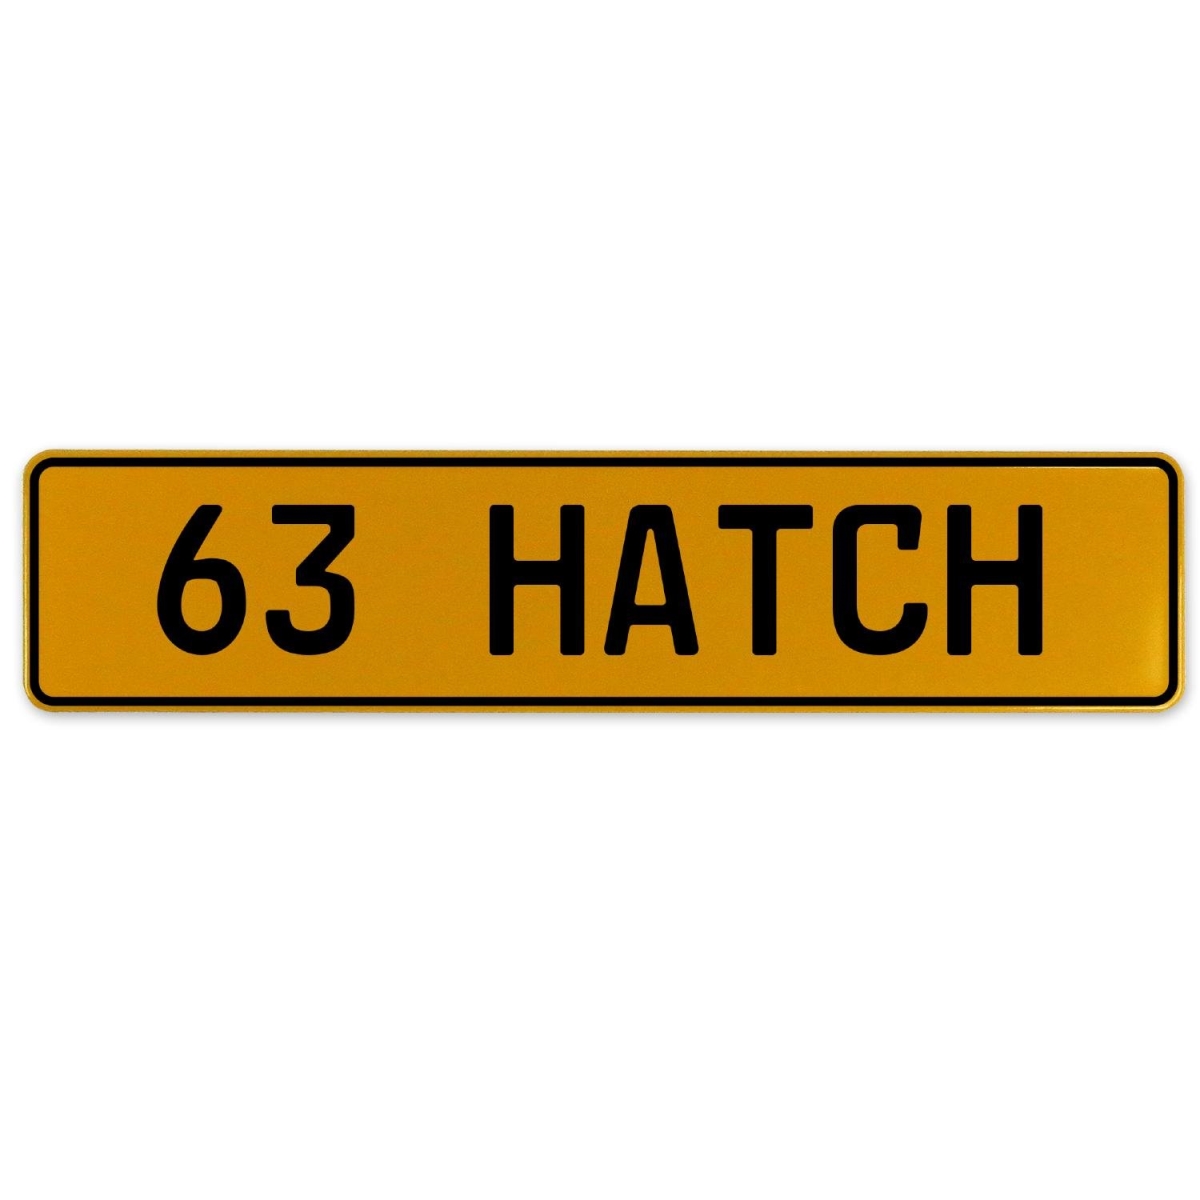 63 Hatch - Yellow Aluminum Street Sign Mancave Euro Plate Name Door Sign Wall